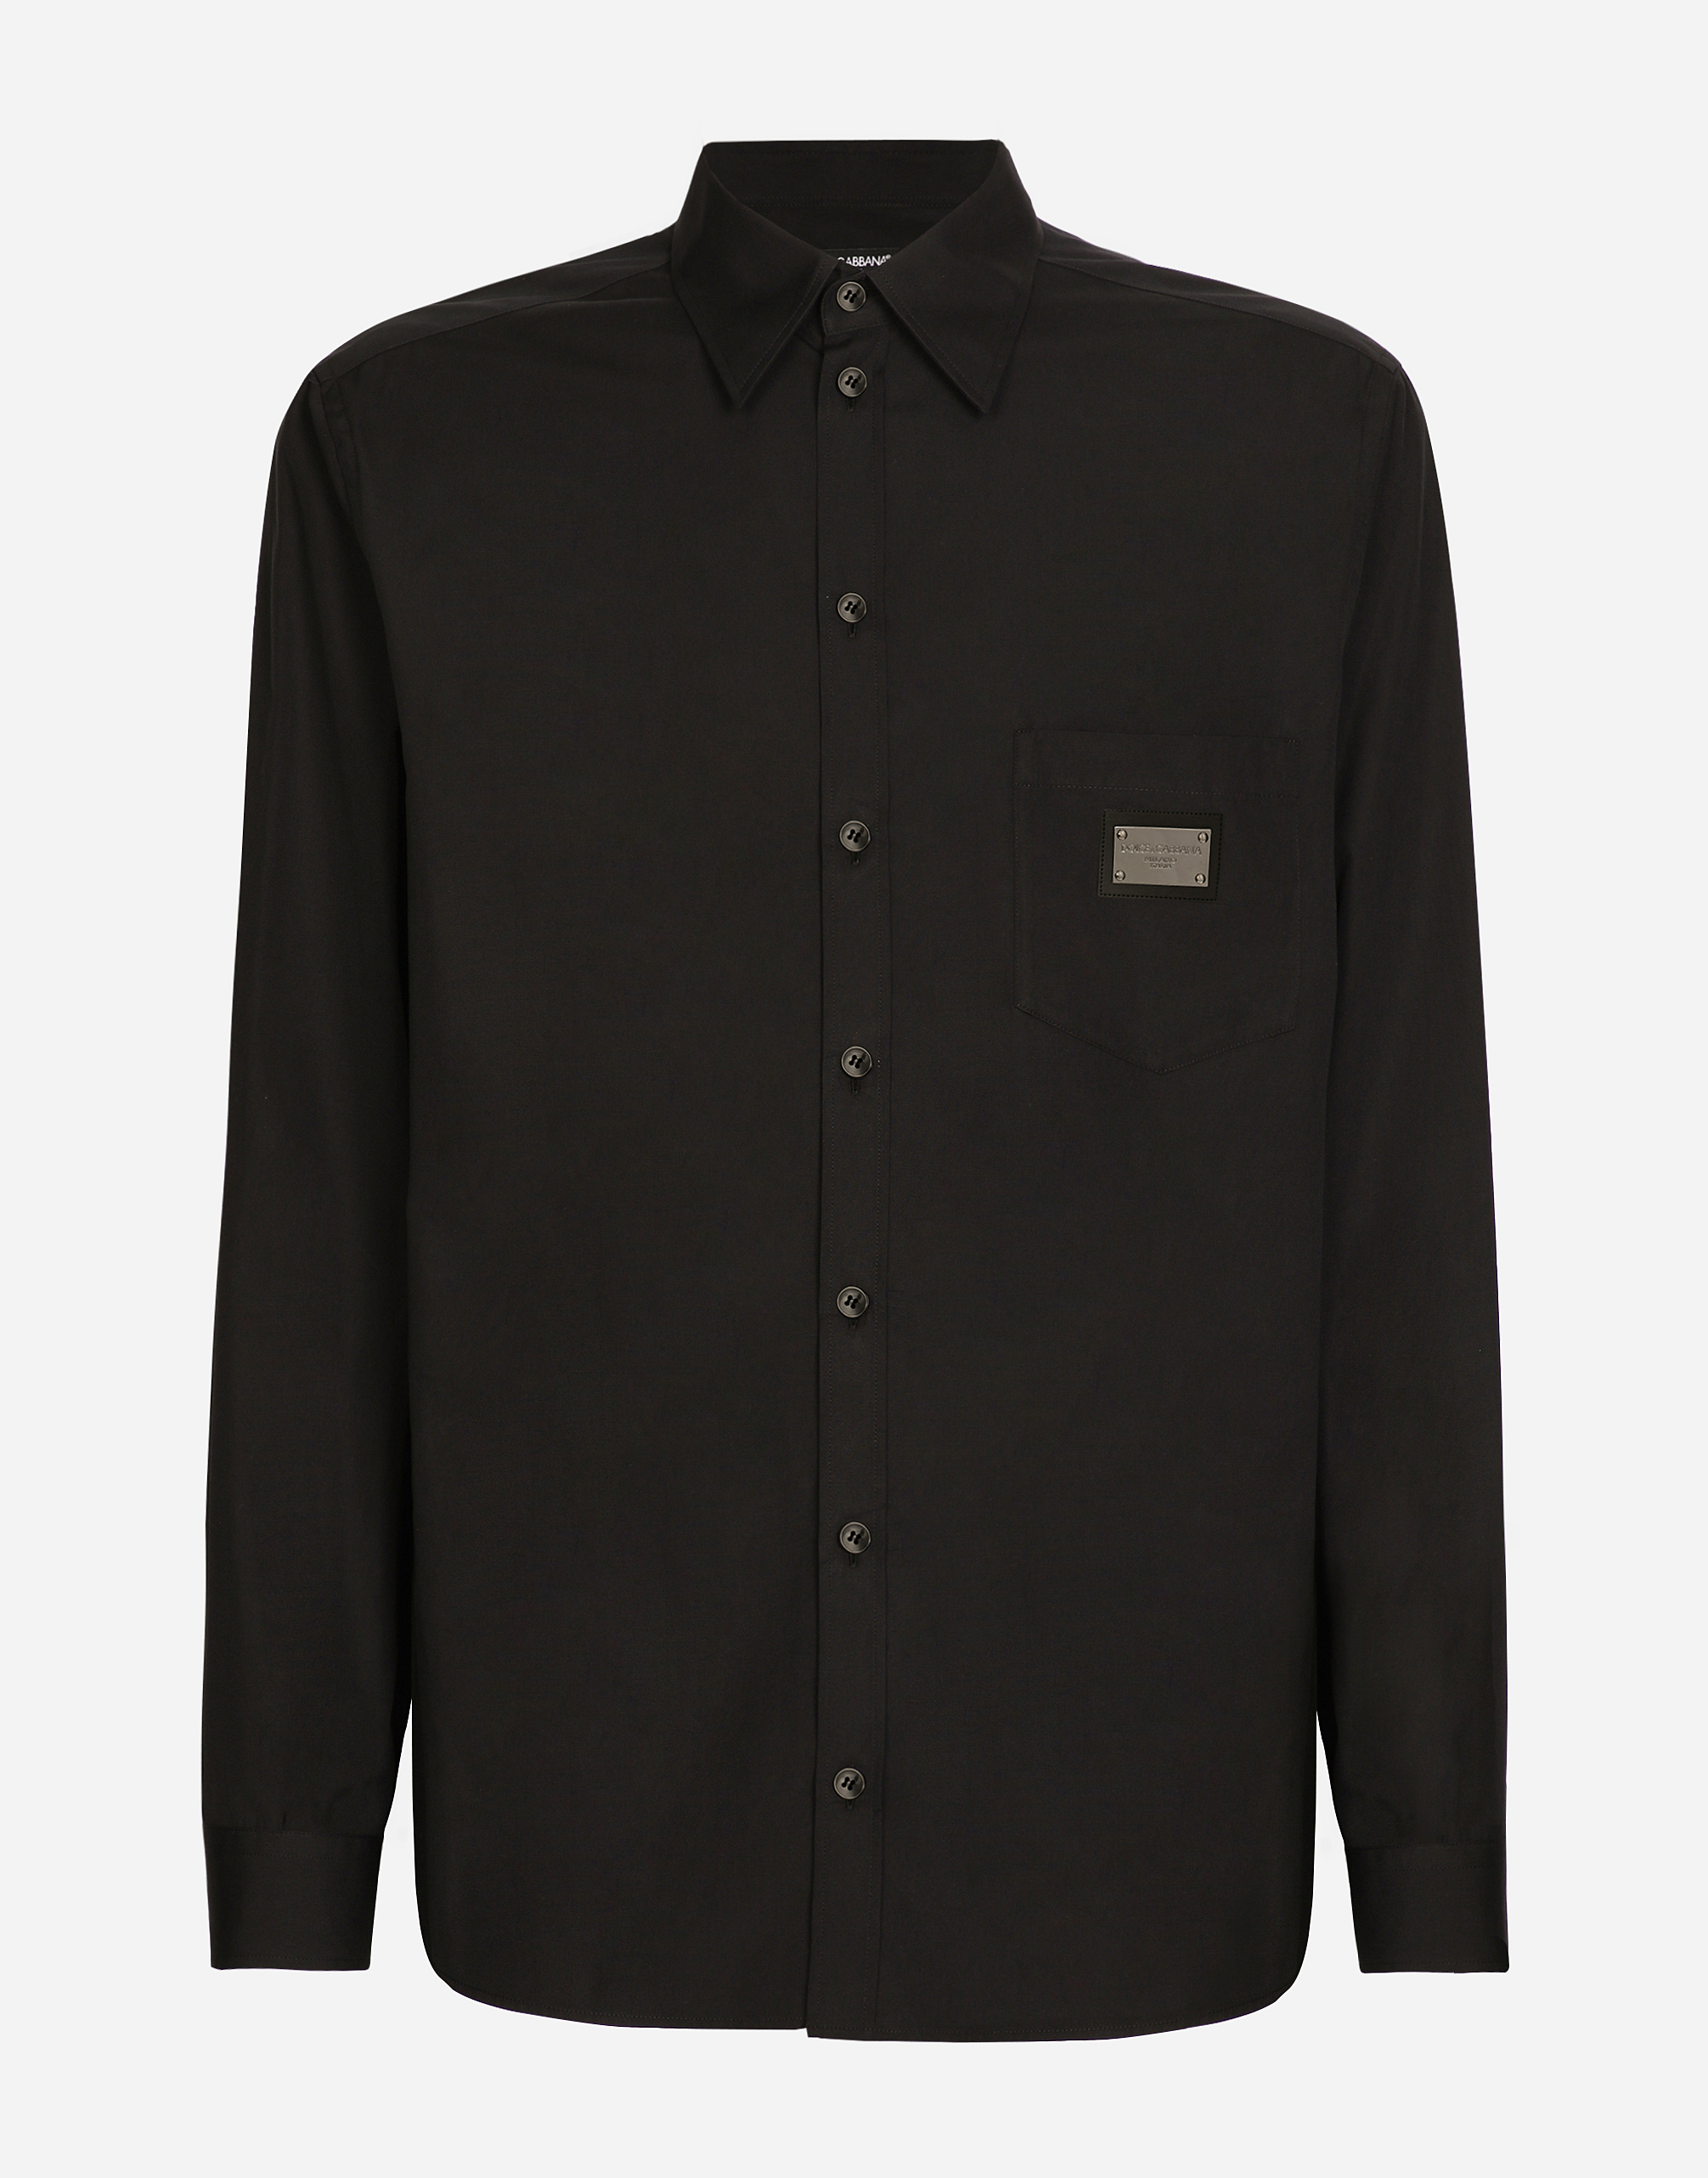 Dolce & Gabbana Black Martini Fit Shirt